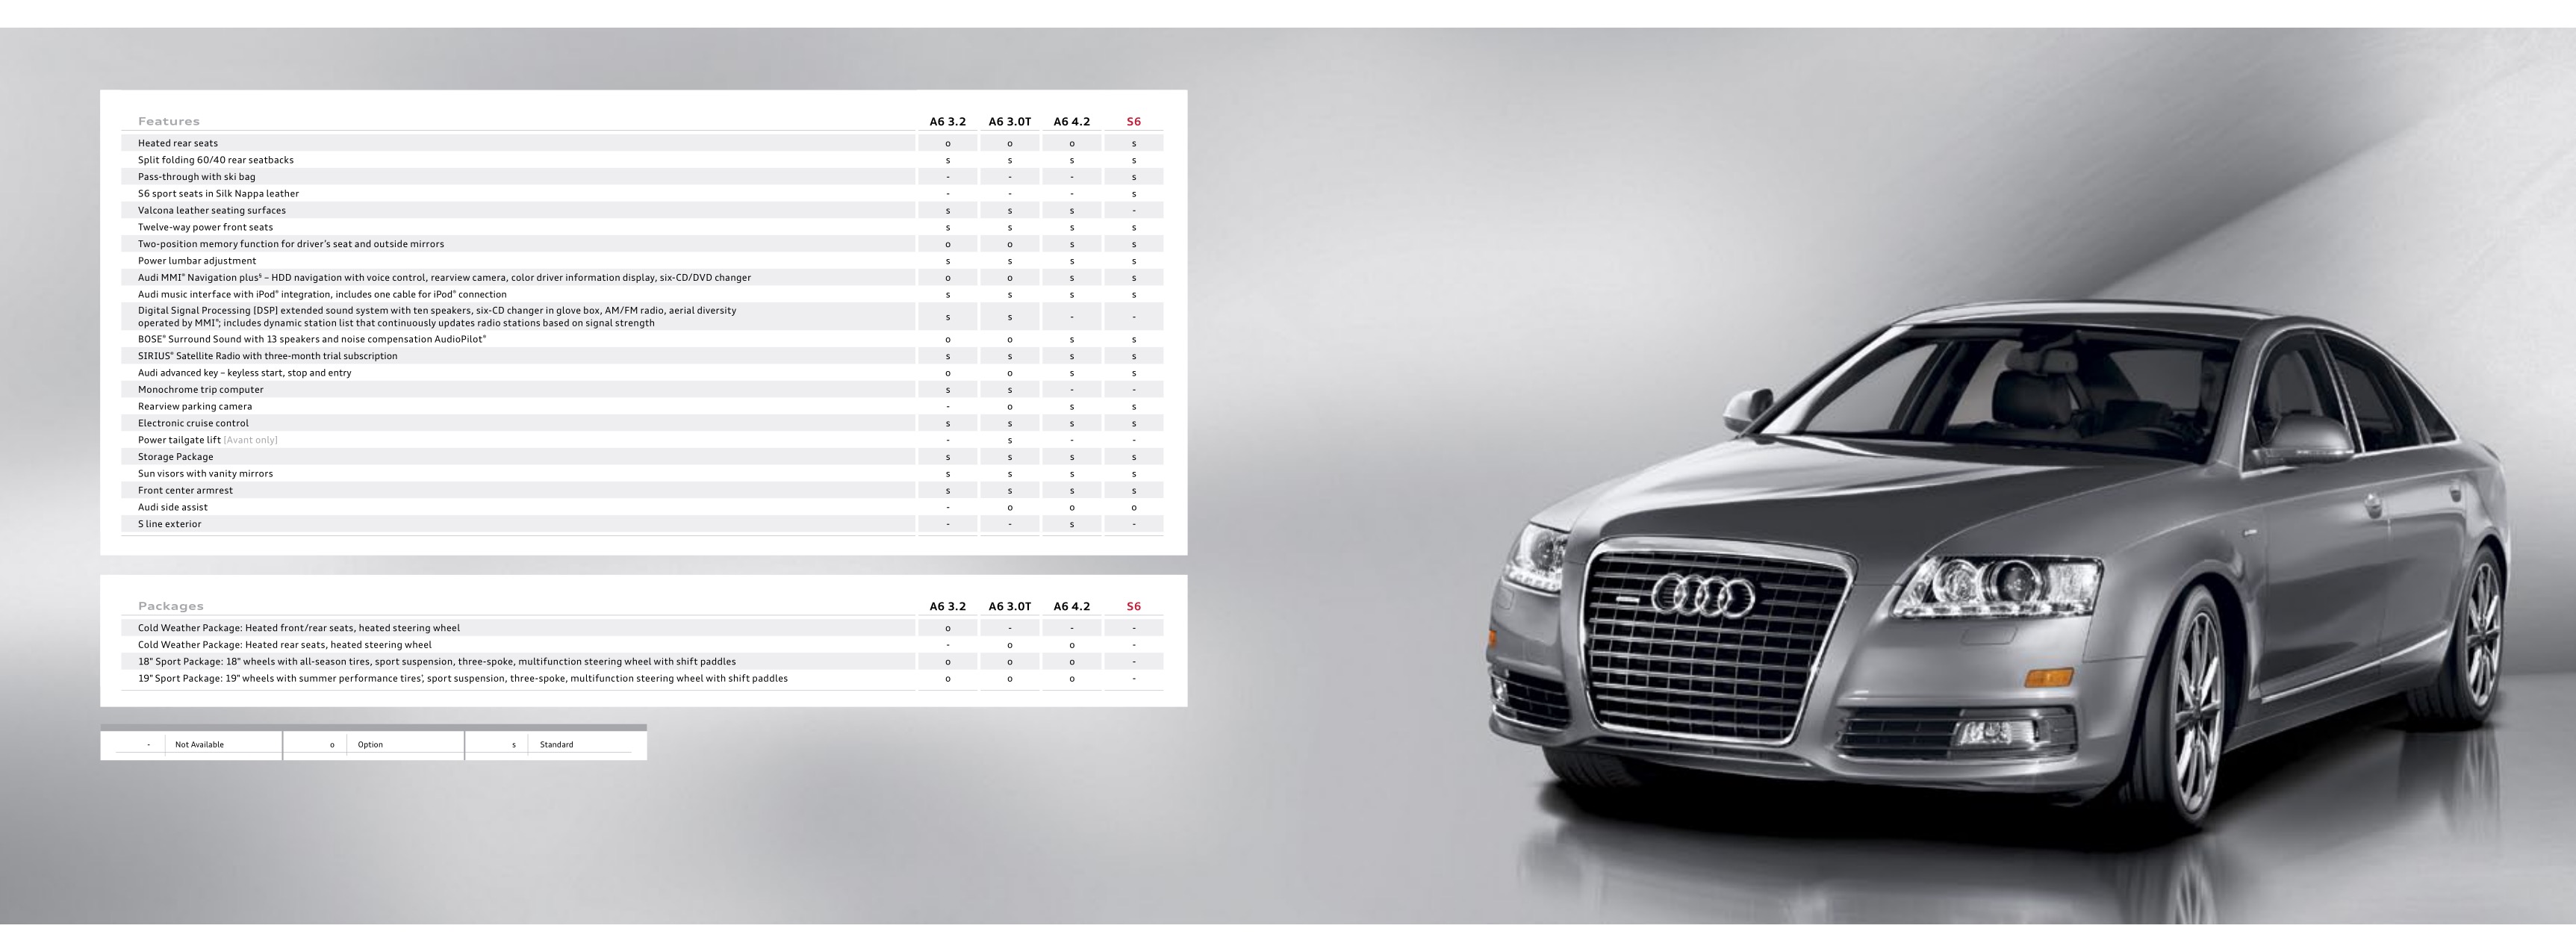 2010 Audi A6 Brochure Page 33